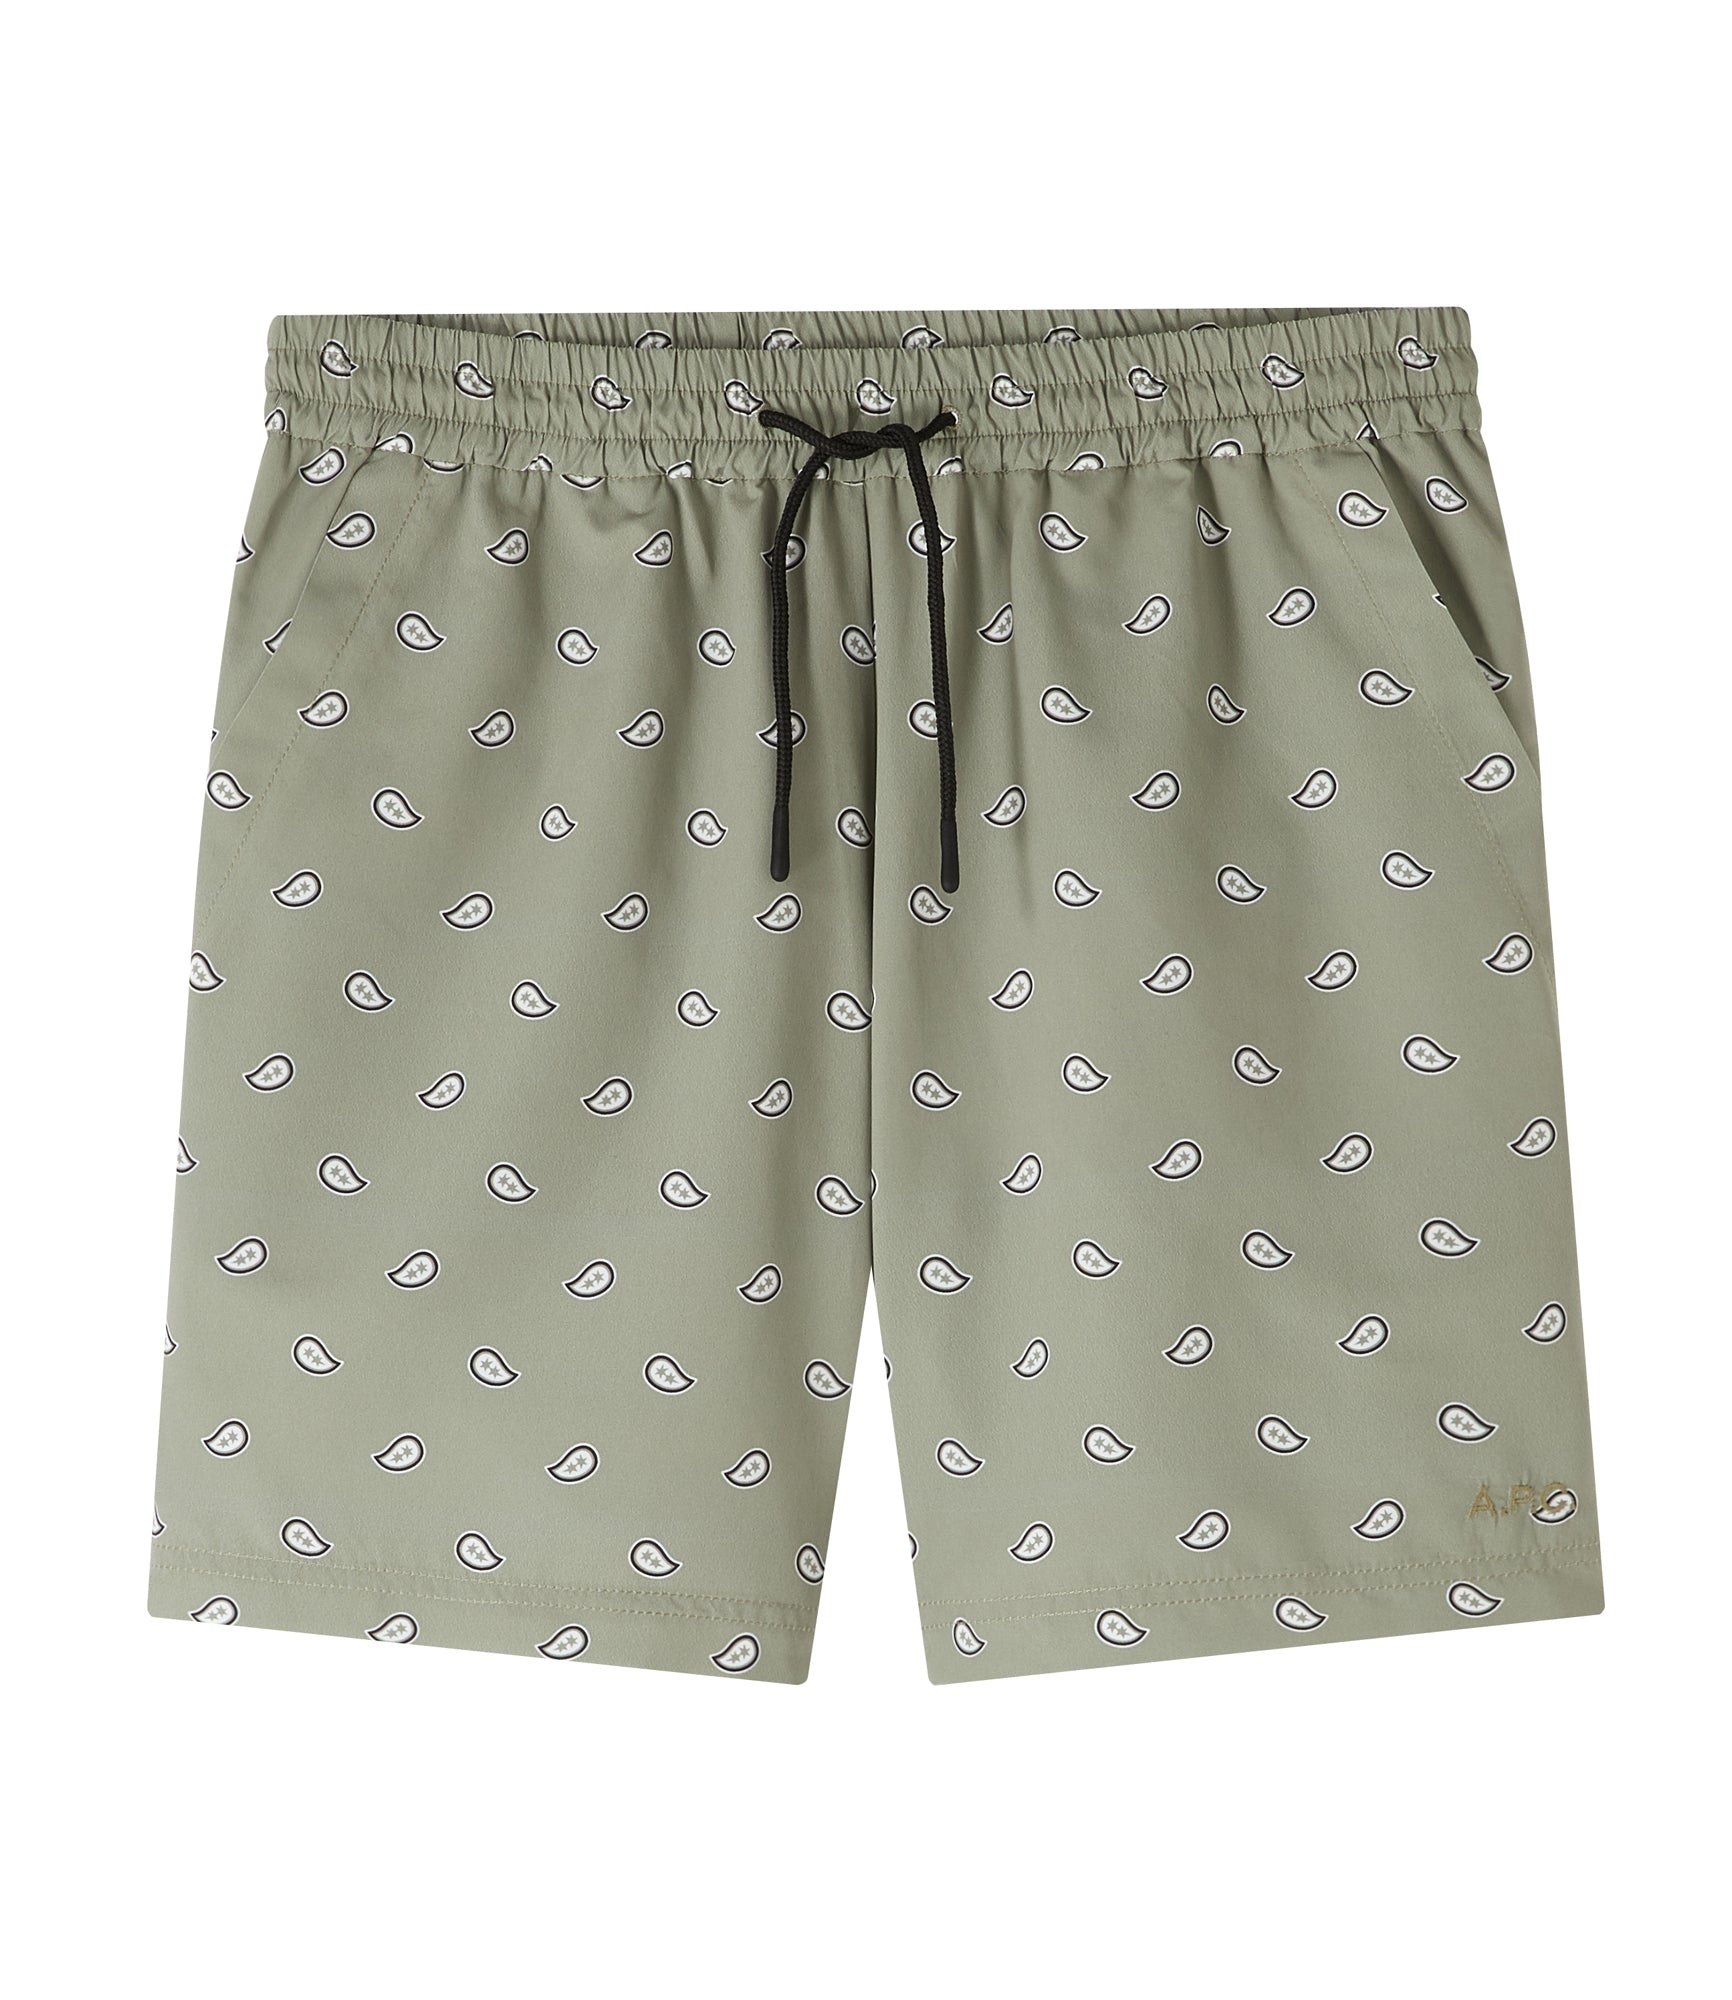 Bobby shorts - 1